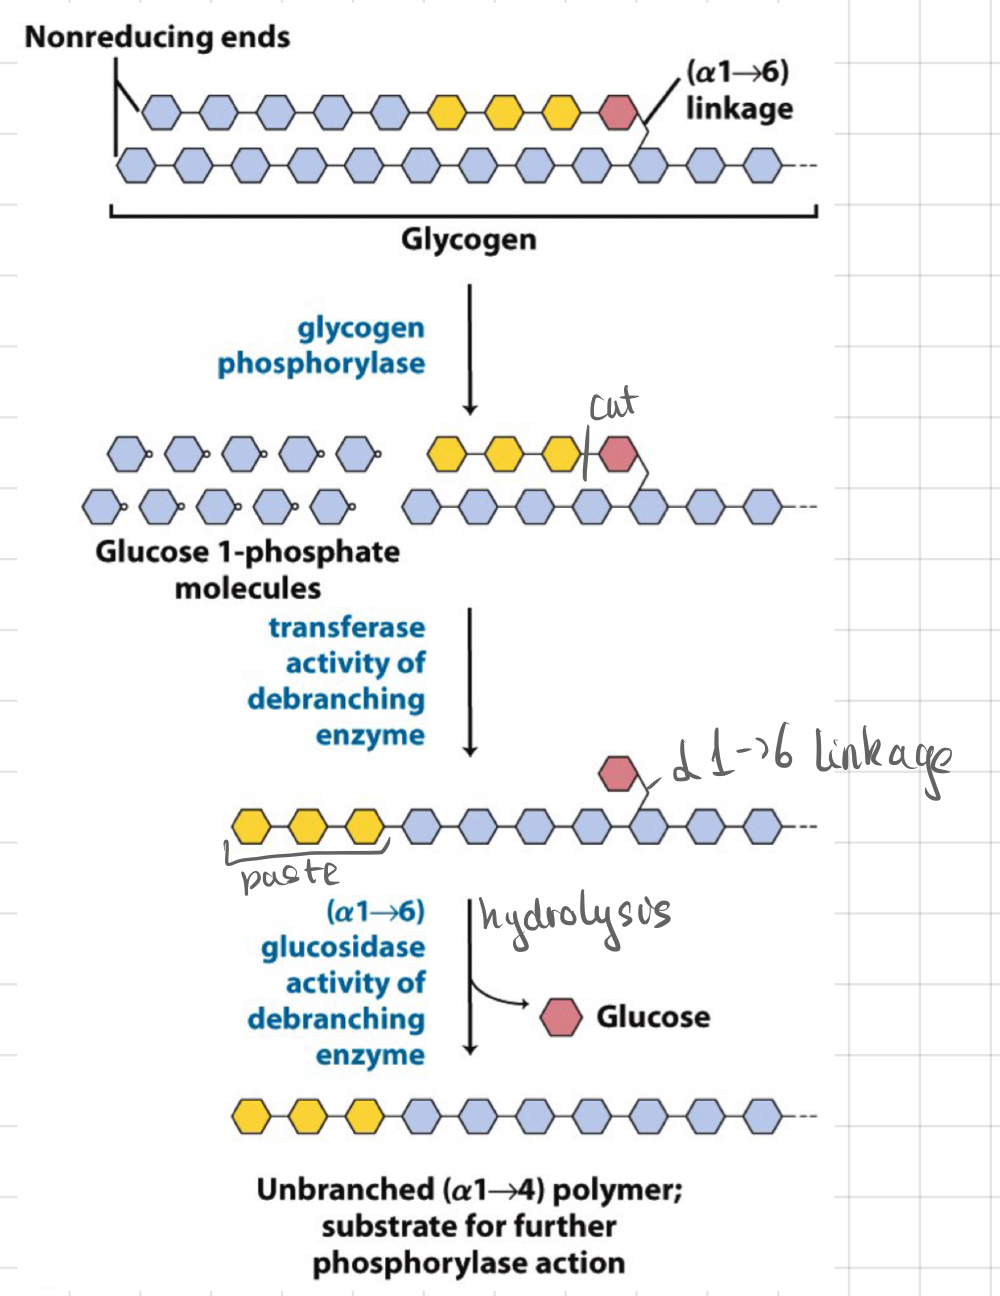 <ul><li><p><u><strong>Debranching enzyme</strong></u></p></li><li><p>At the branch points, a simple hydrolysis is used</p></li><li><p>≈ 10% of the glucose residues are released as glucose (<u>not</u> glucose 1-P)</p></li></ul>